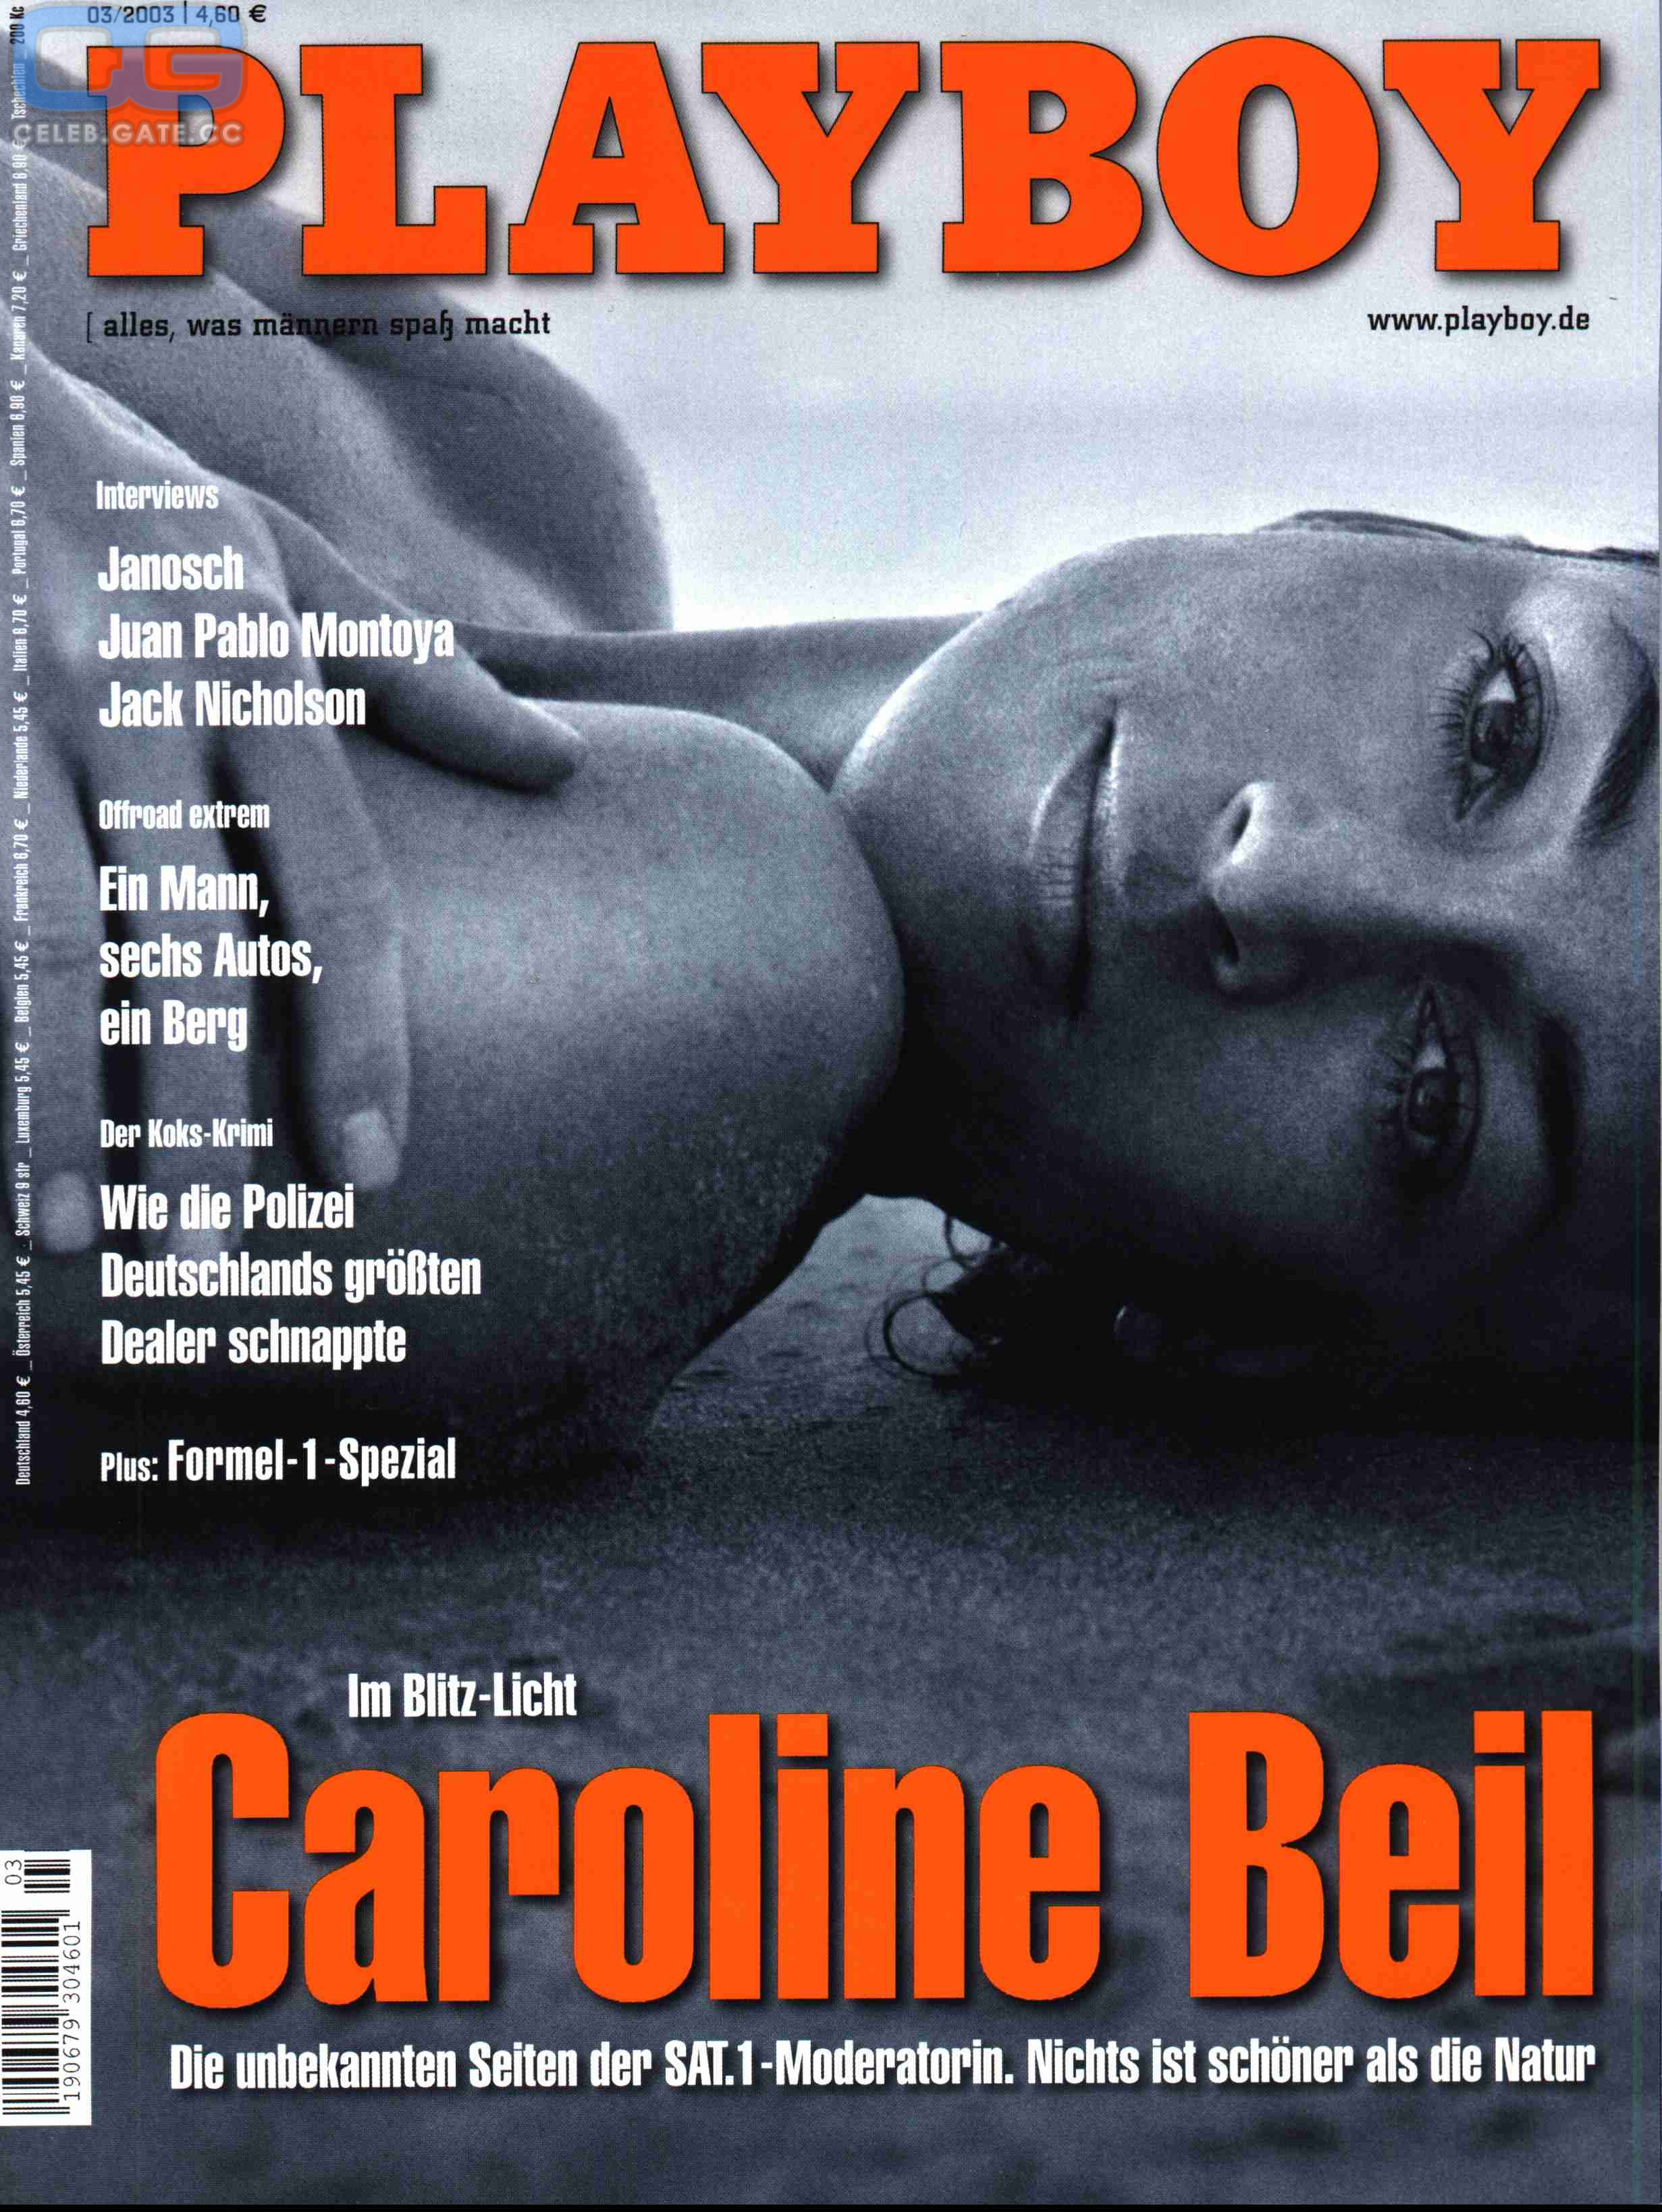 Caroline beil nackt celeb gate cc